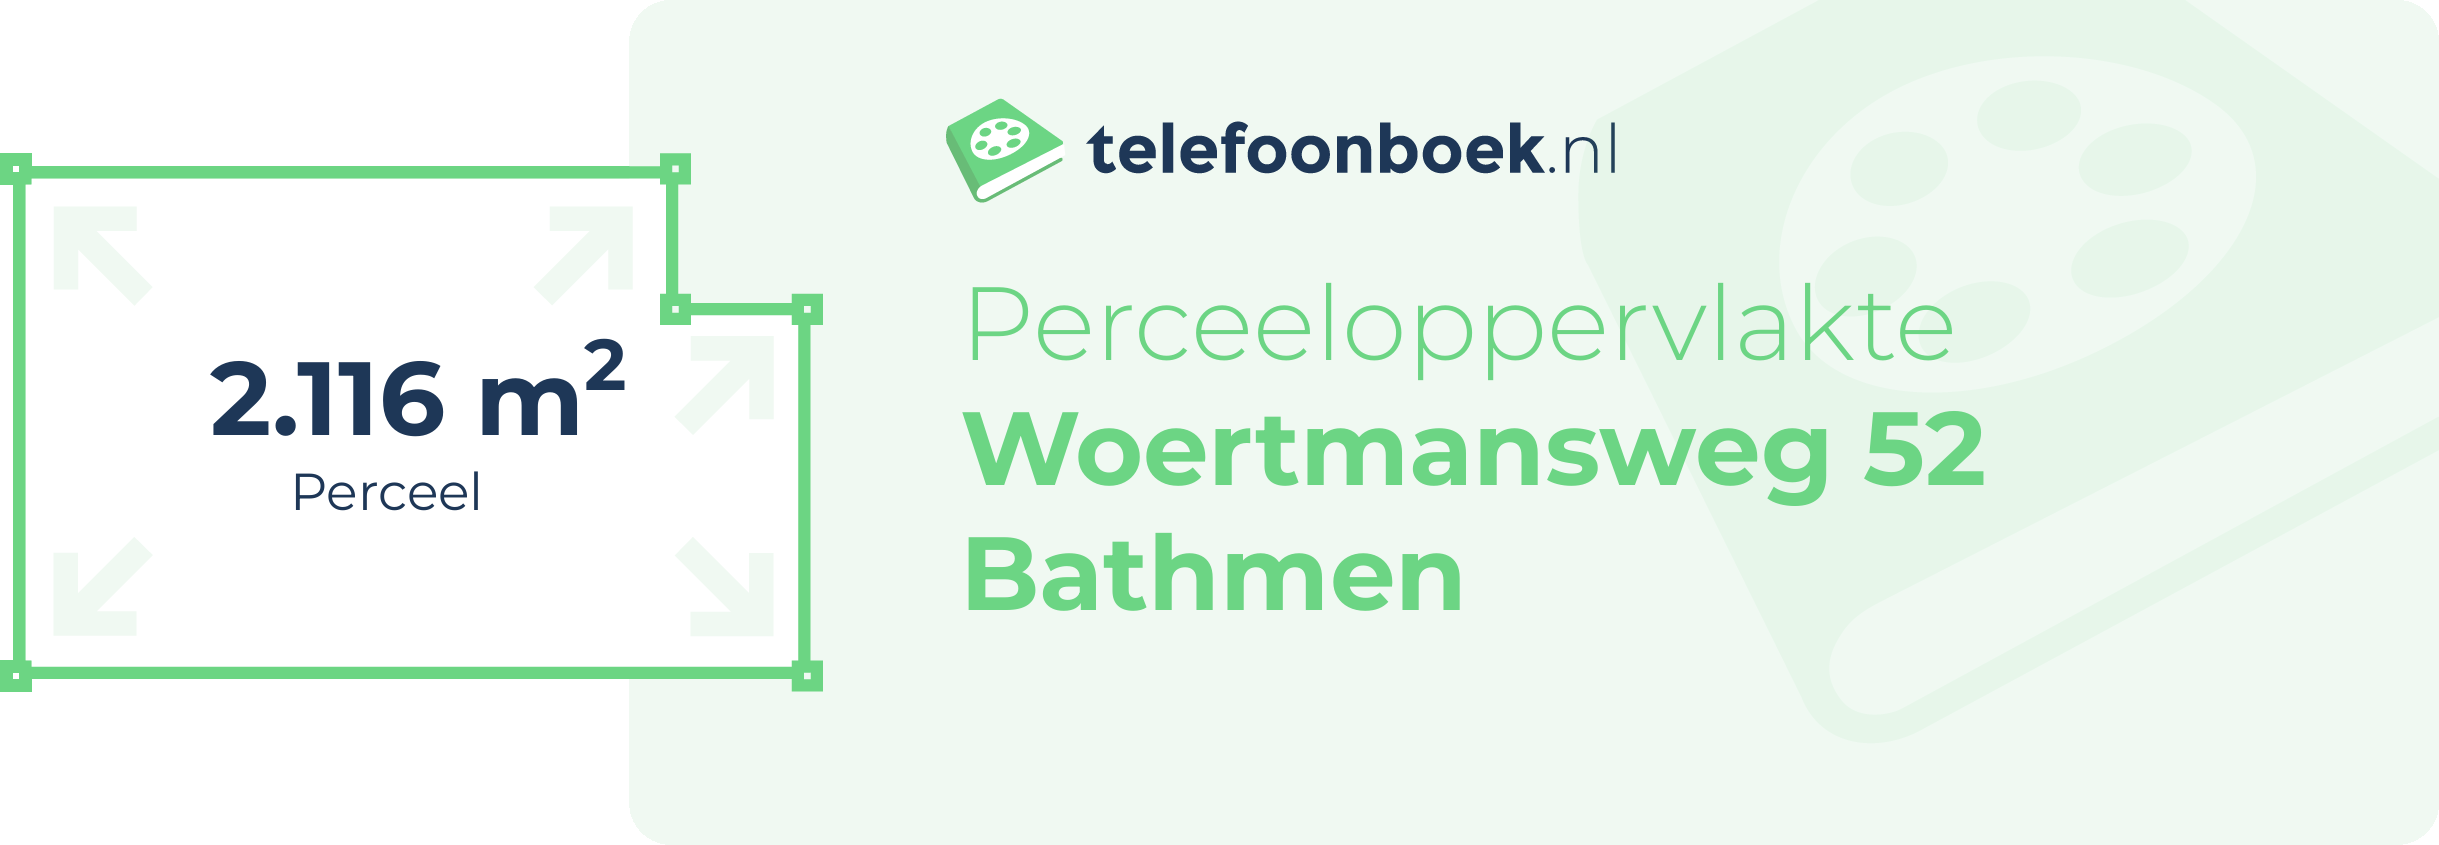 Perceeloppervlakte Woertmansweg 52 Bathmen